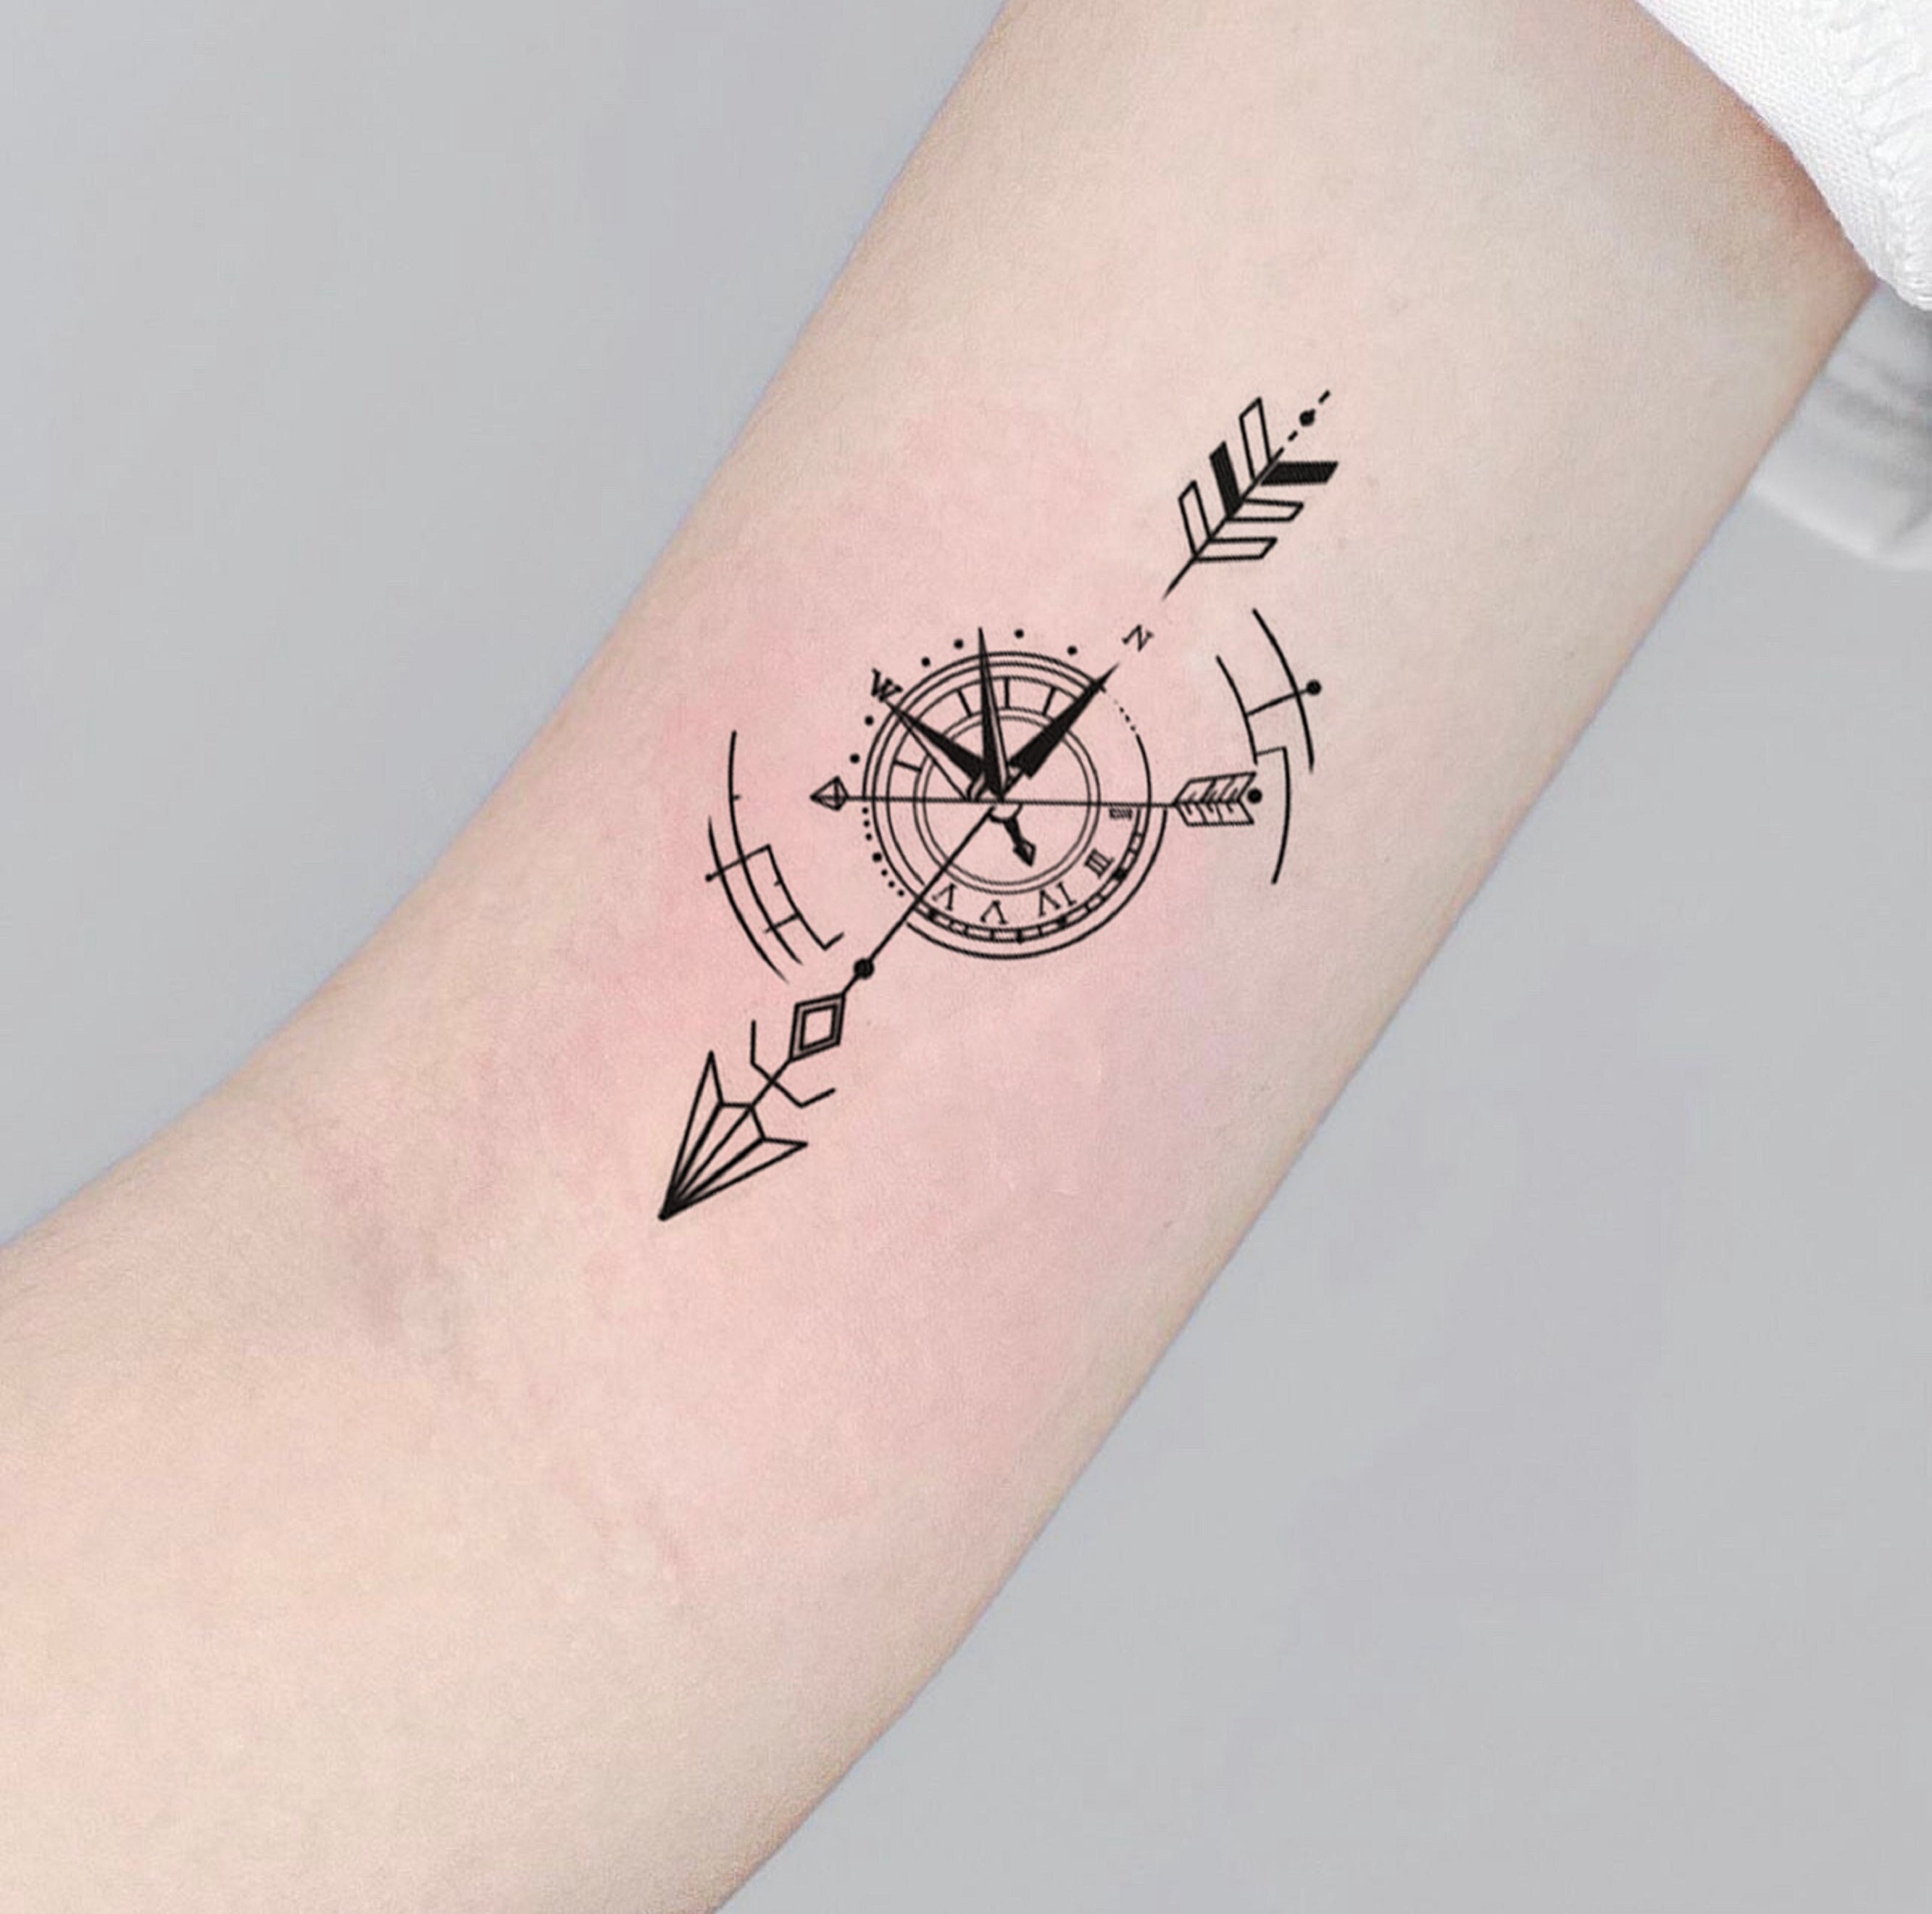 Voorkoms 4 Directions Wheel Anchor Arrow Compass Temporary Body Tattoo Size  11CM x 6CM  2Pcs  Amazonin Beauty